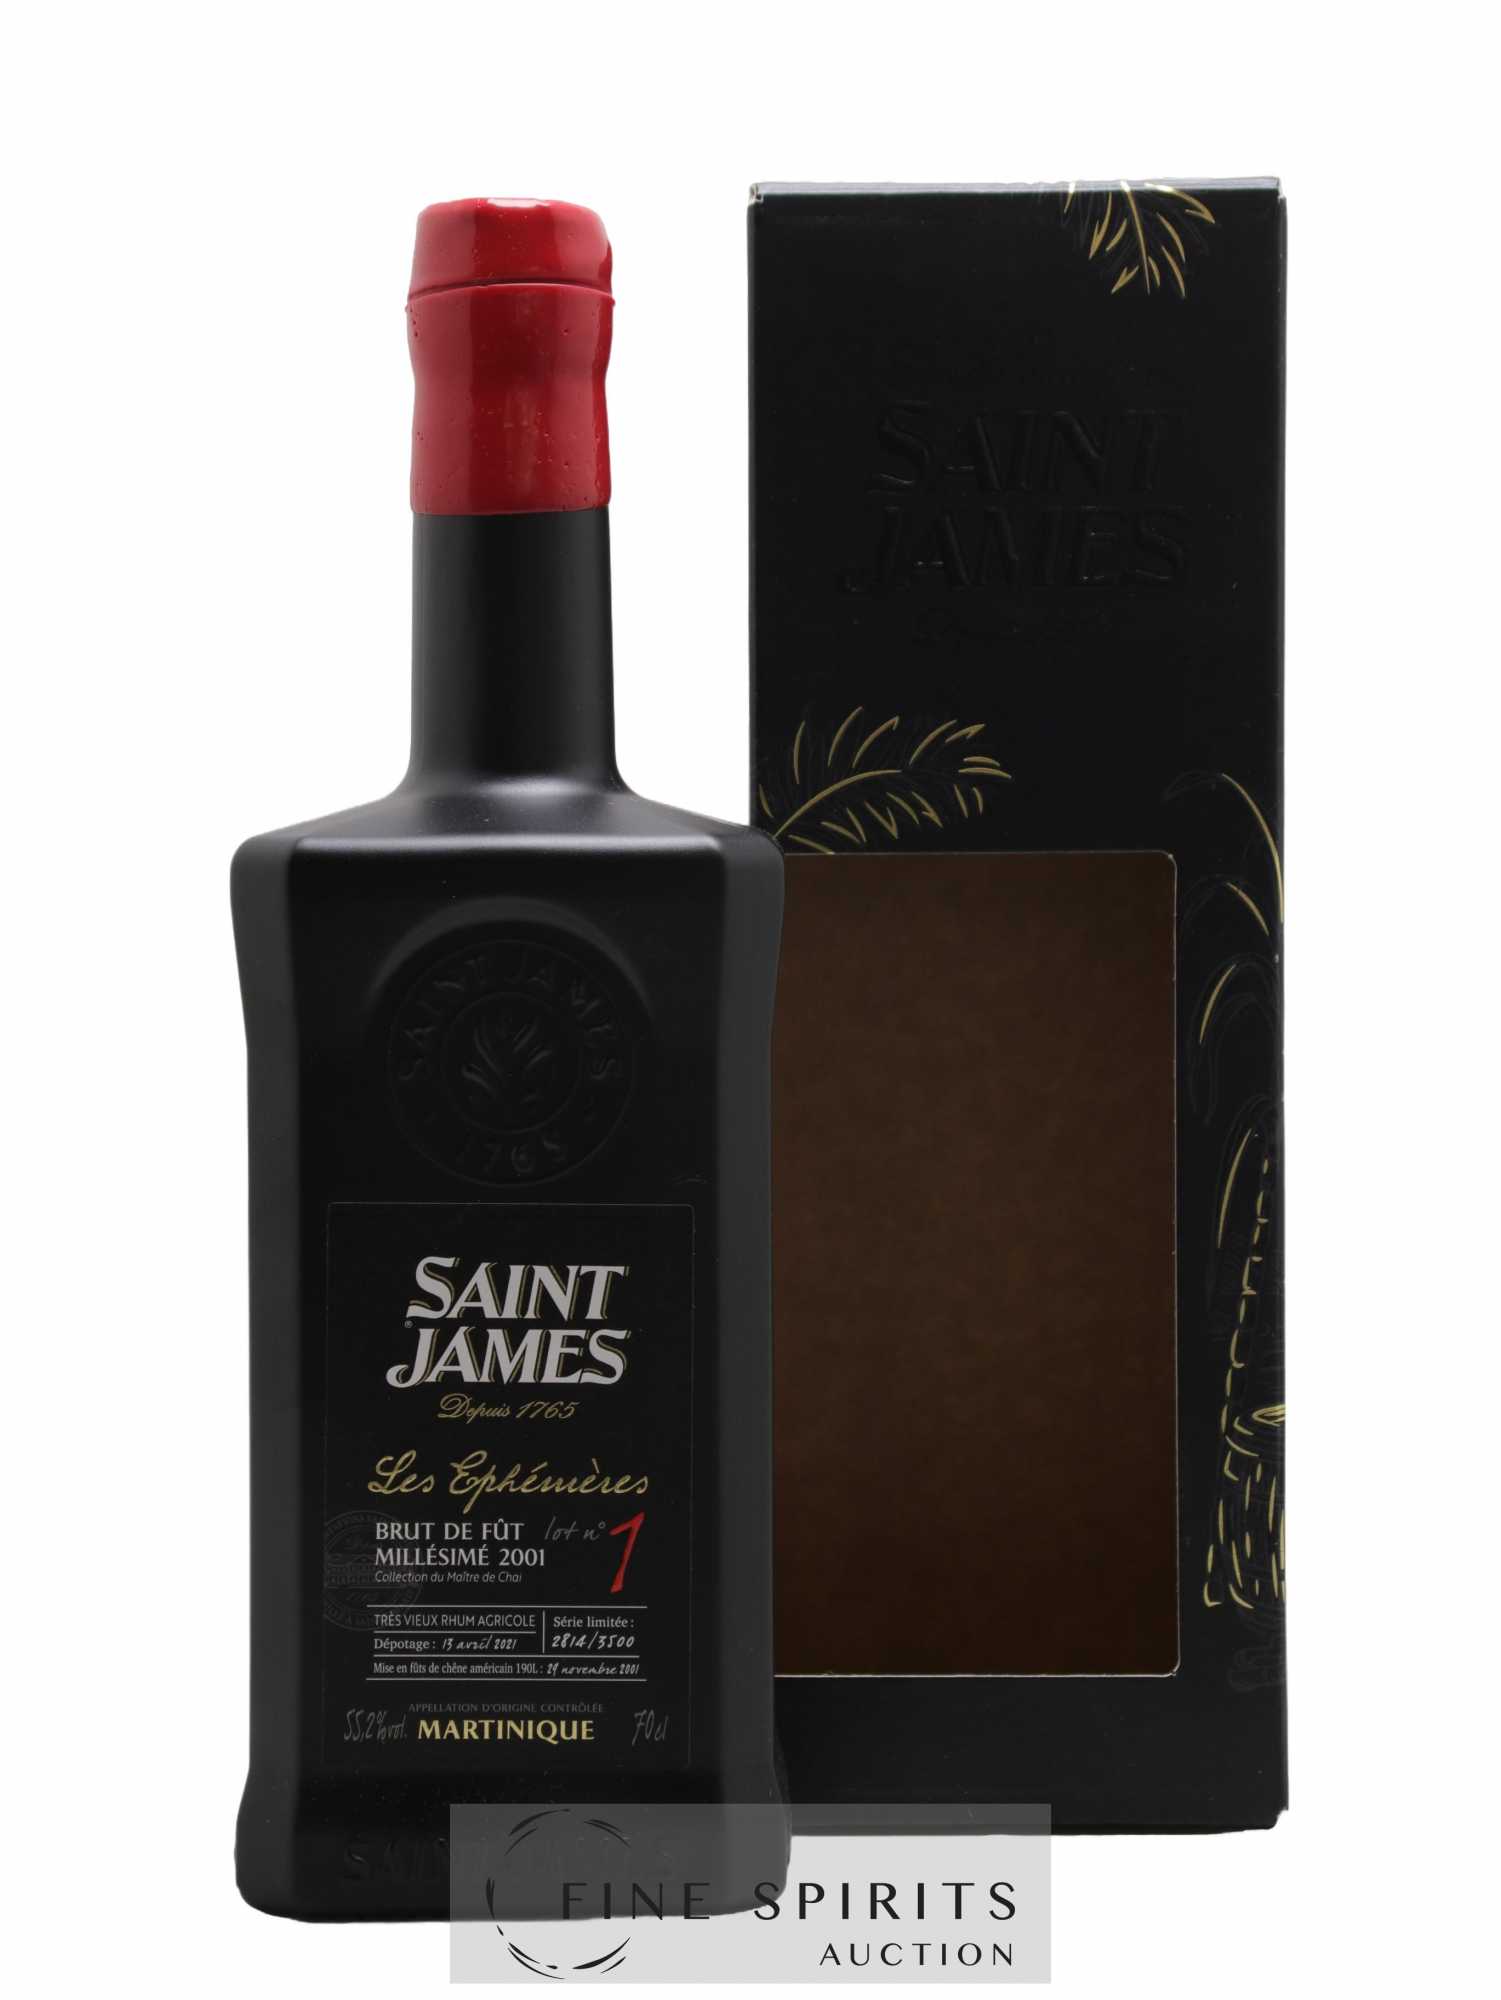 Saint James 2001 Of. Les Ephémères Lot n°1 - One of 3500 - bottled 2021